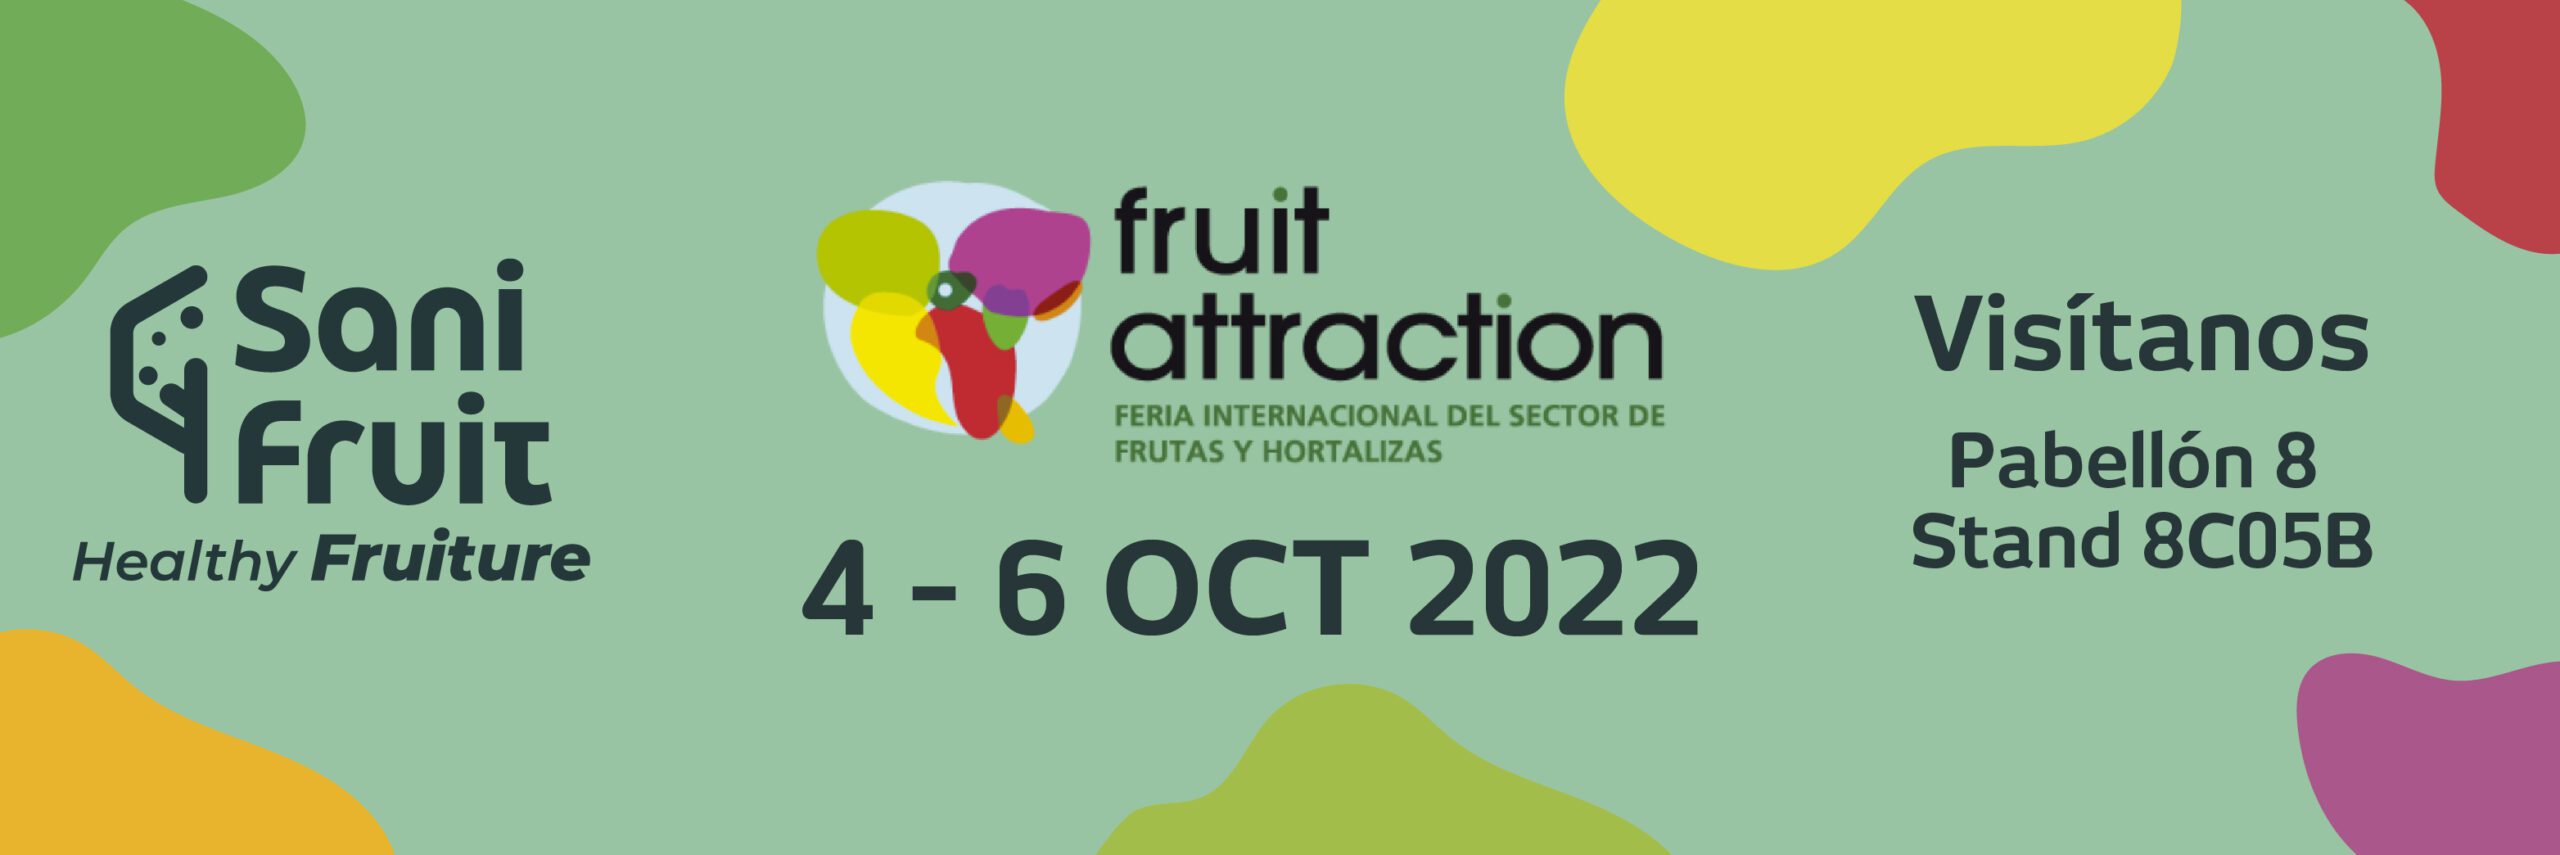 Sanifruit en Fruit Attraction 2022